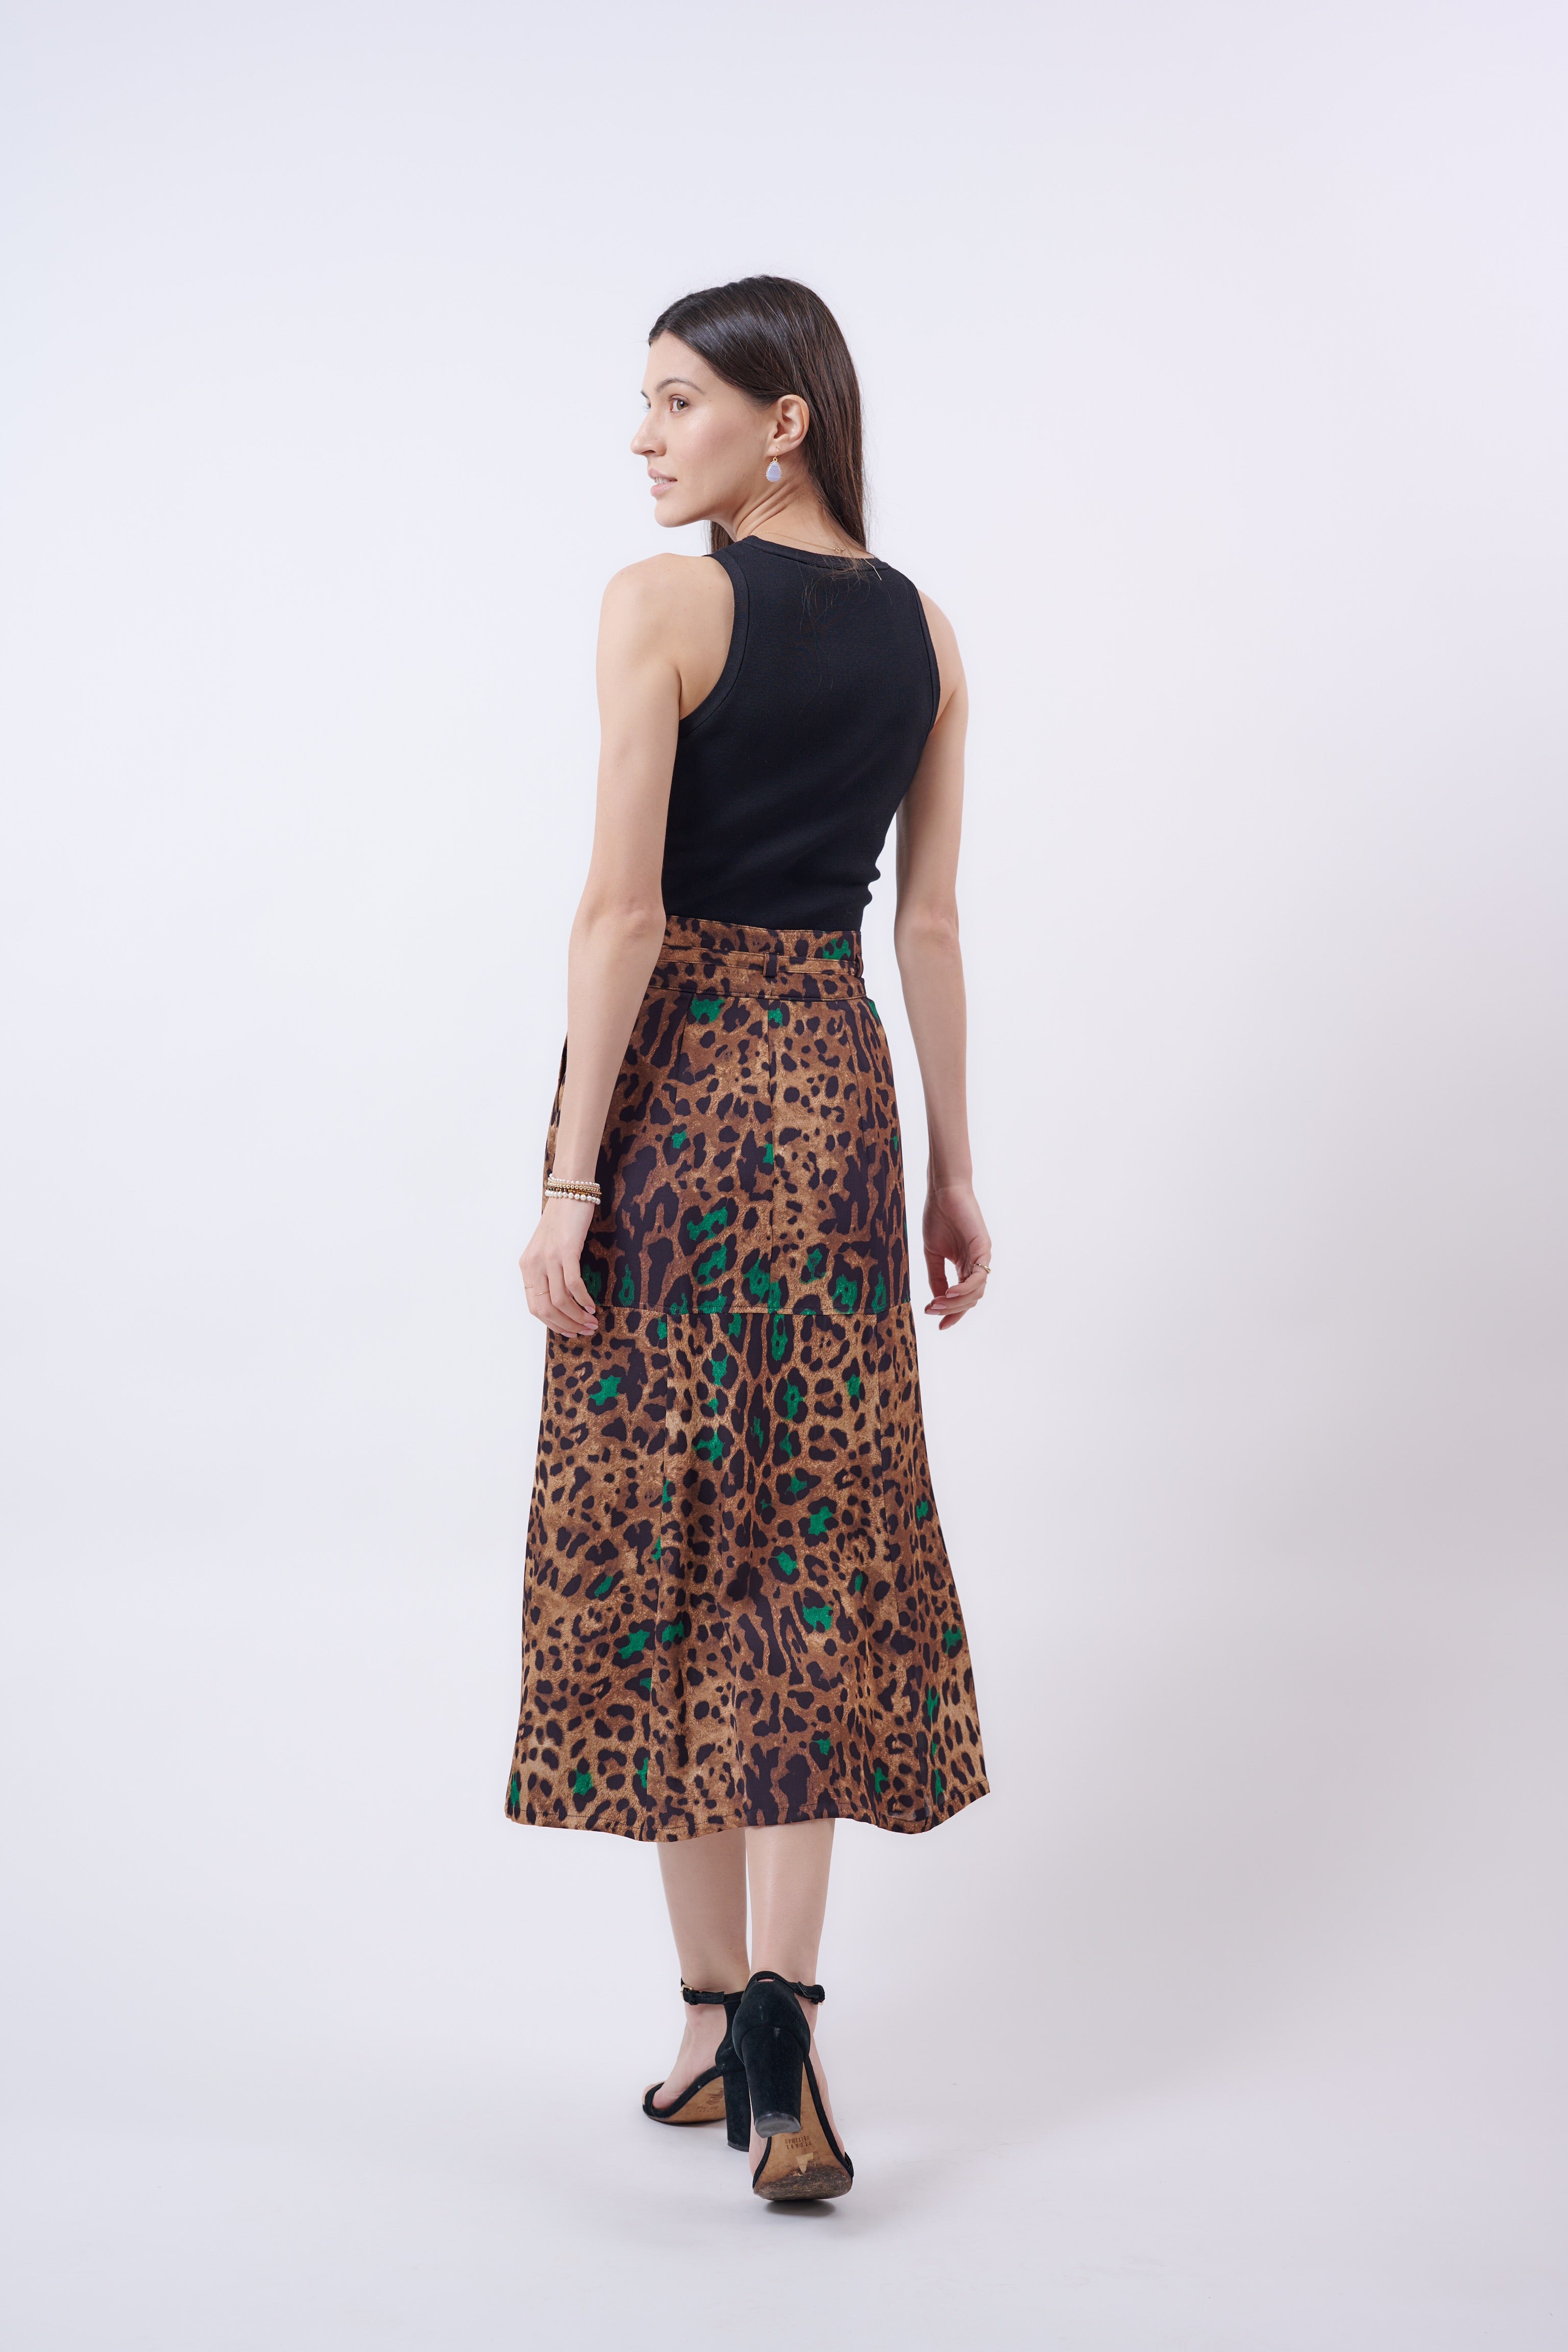 Discover the Latest LORNA Leopard Print Midi Skirt